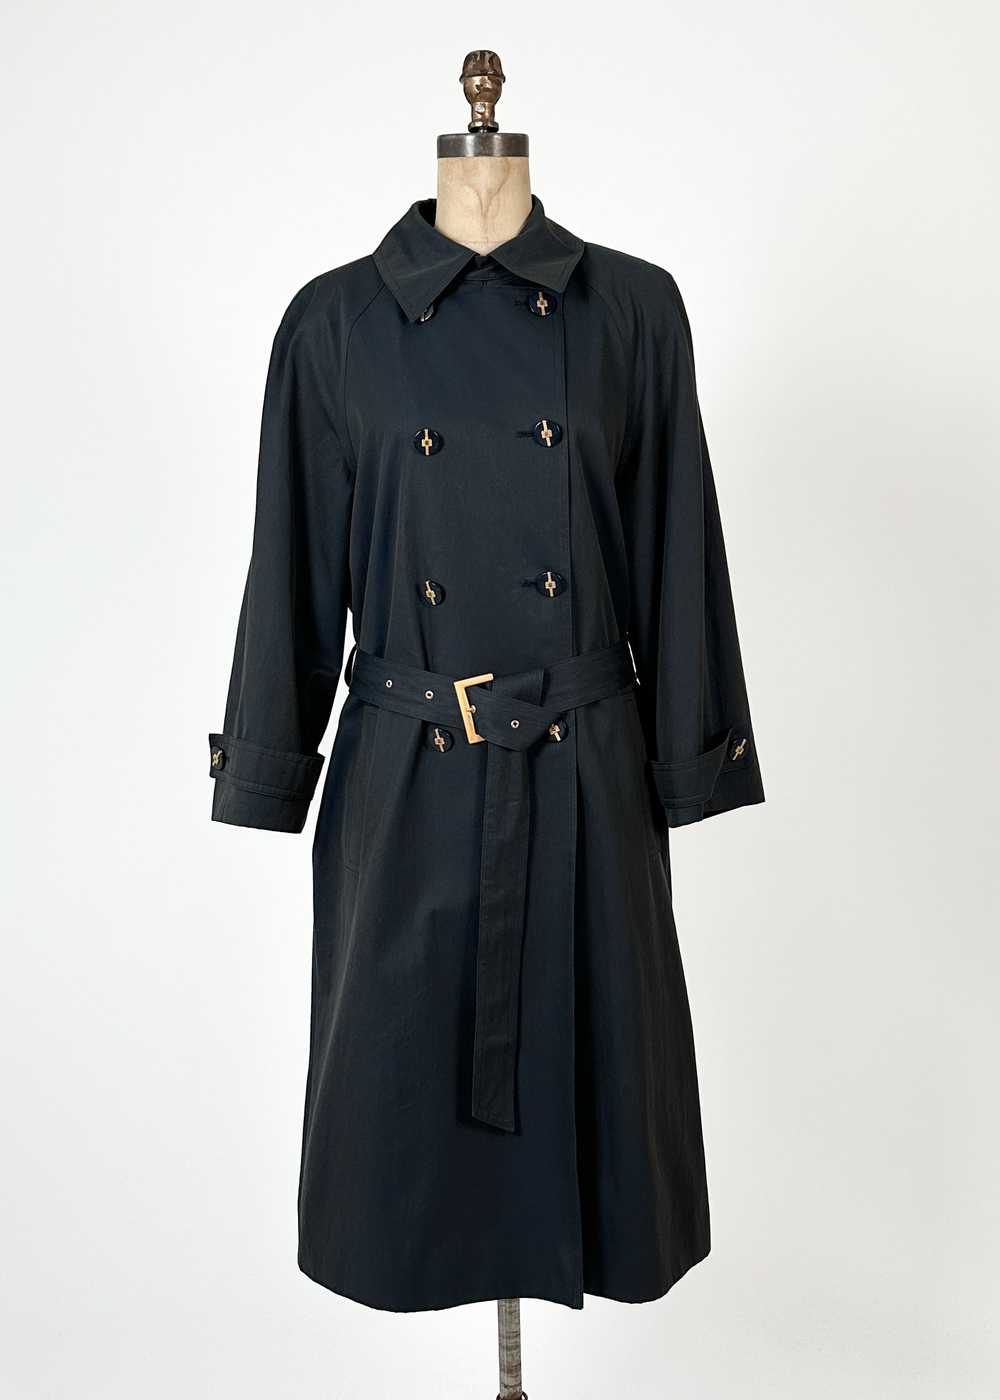 Vintage Louis Féraud Black Trench Coat - image 2